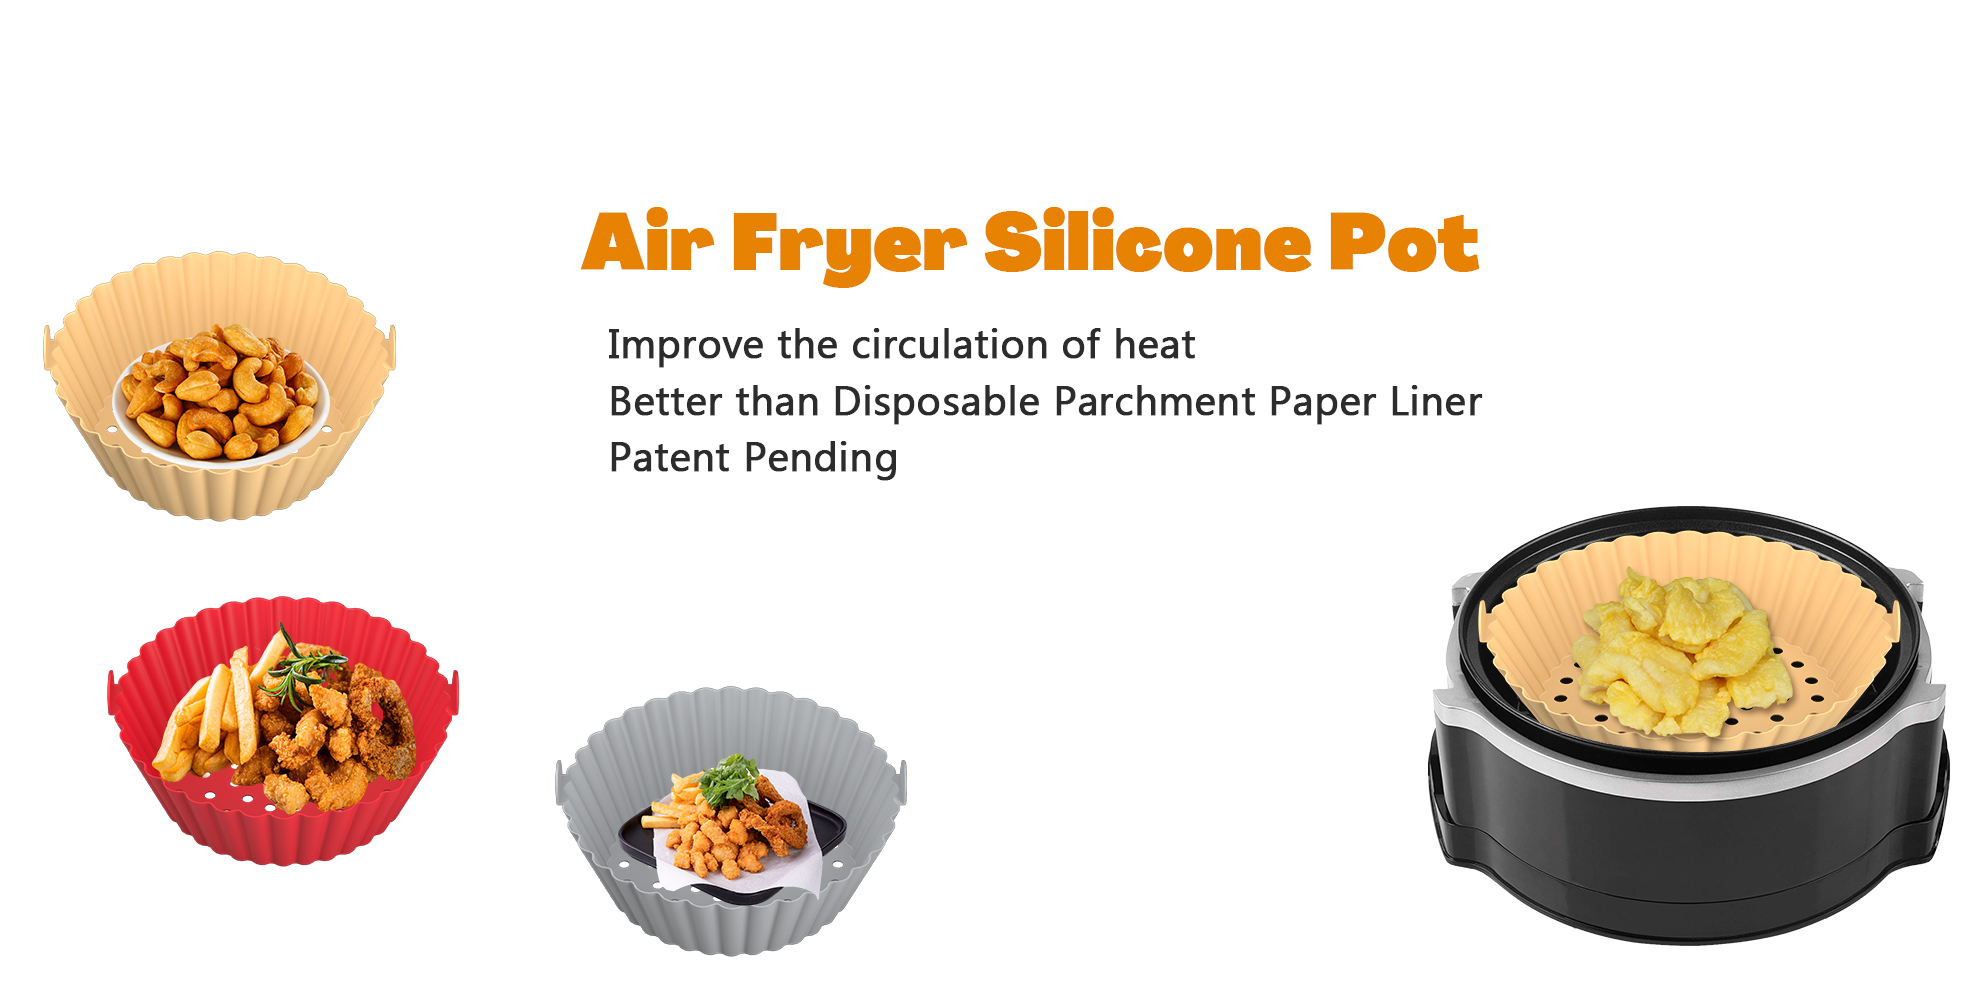 Custom Design Air Fryer Silicone Pot Penggantian Parchment Paper Liners